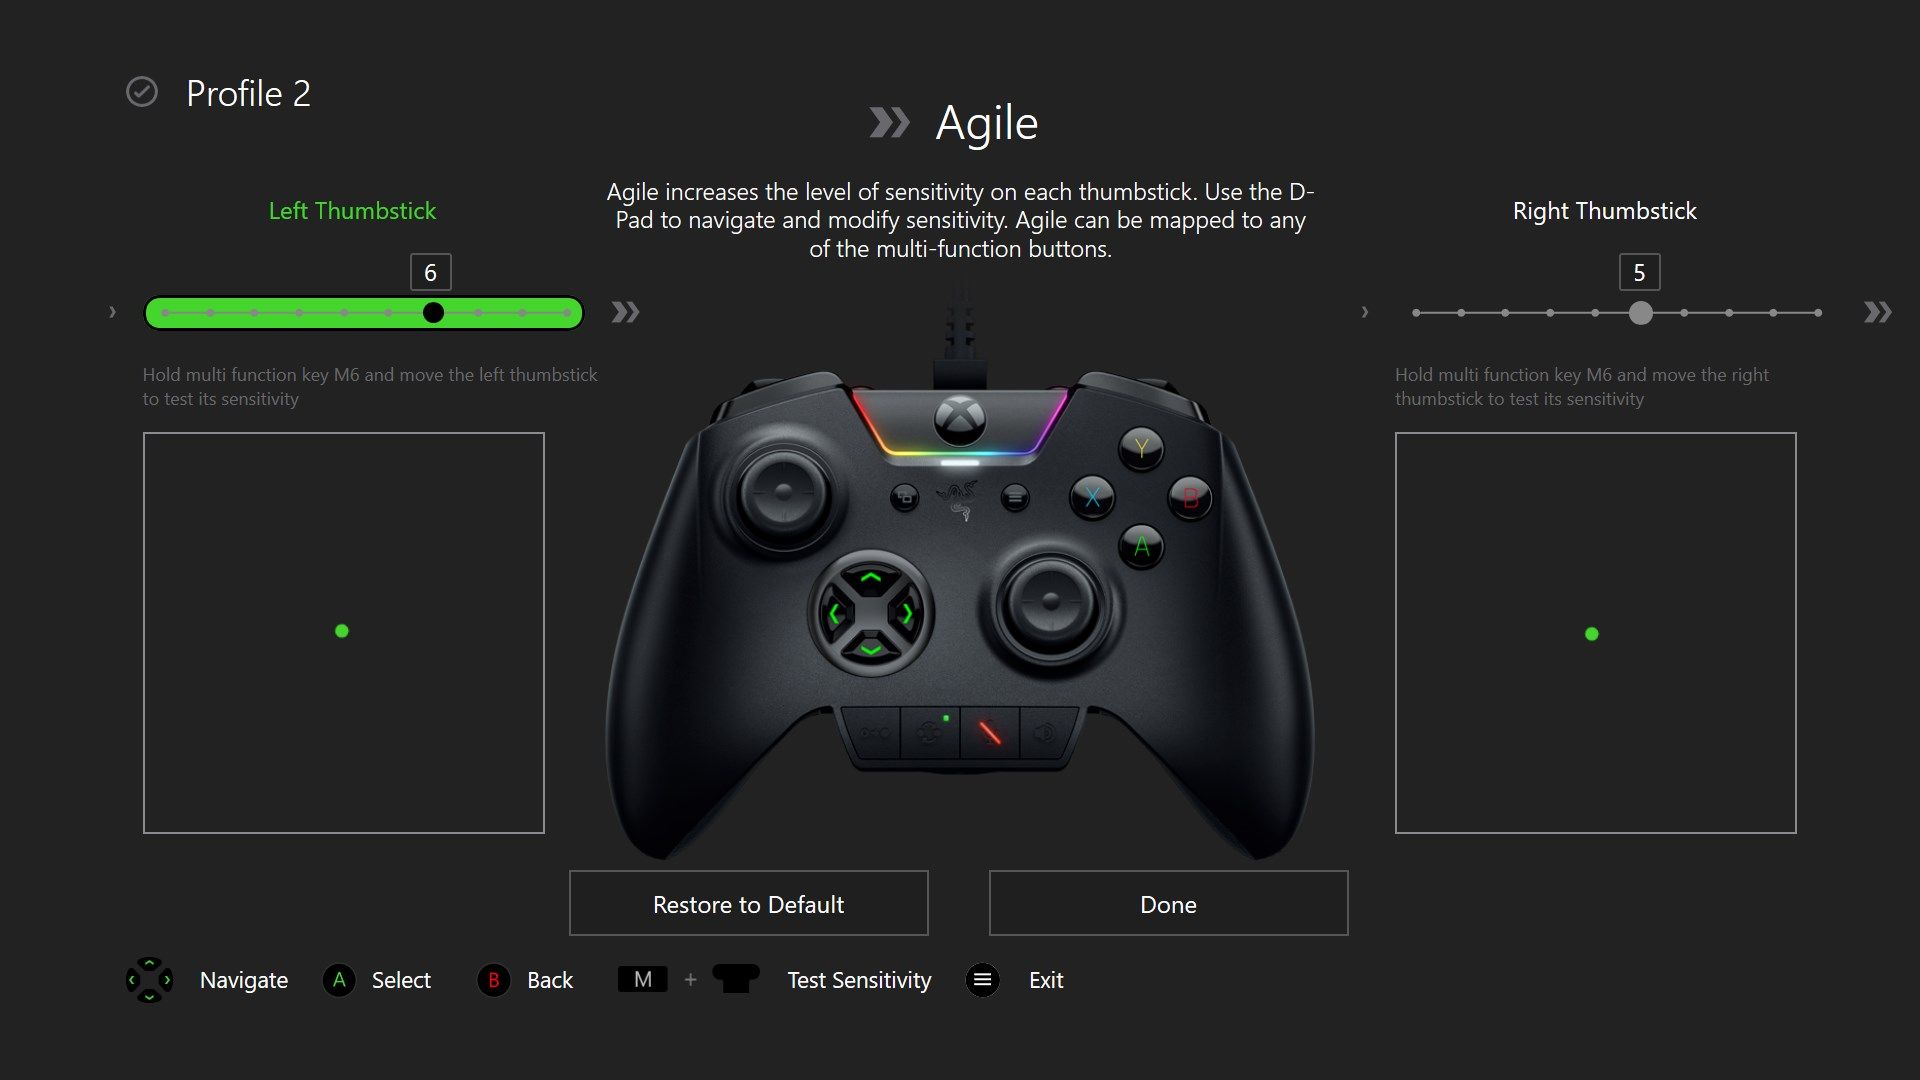 Razer Controller Setup For Xbox